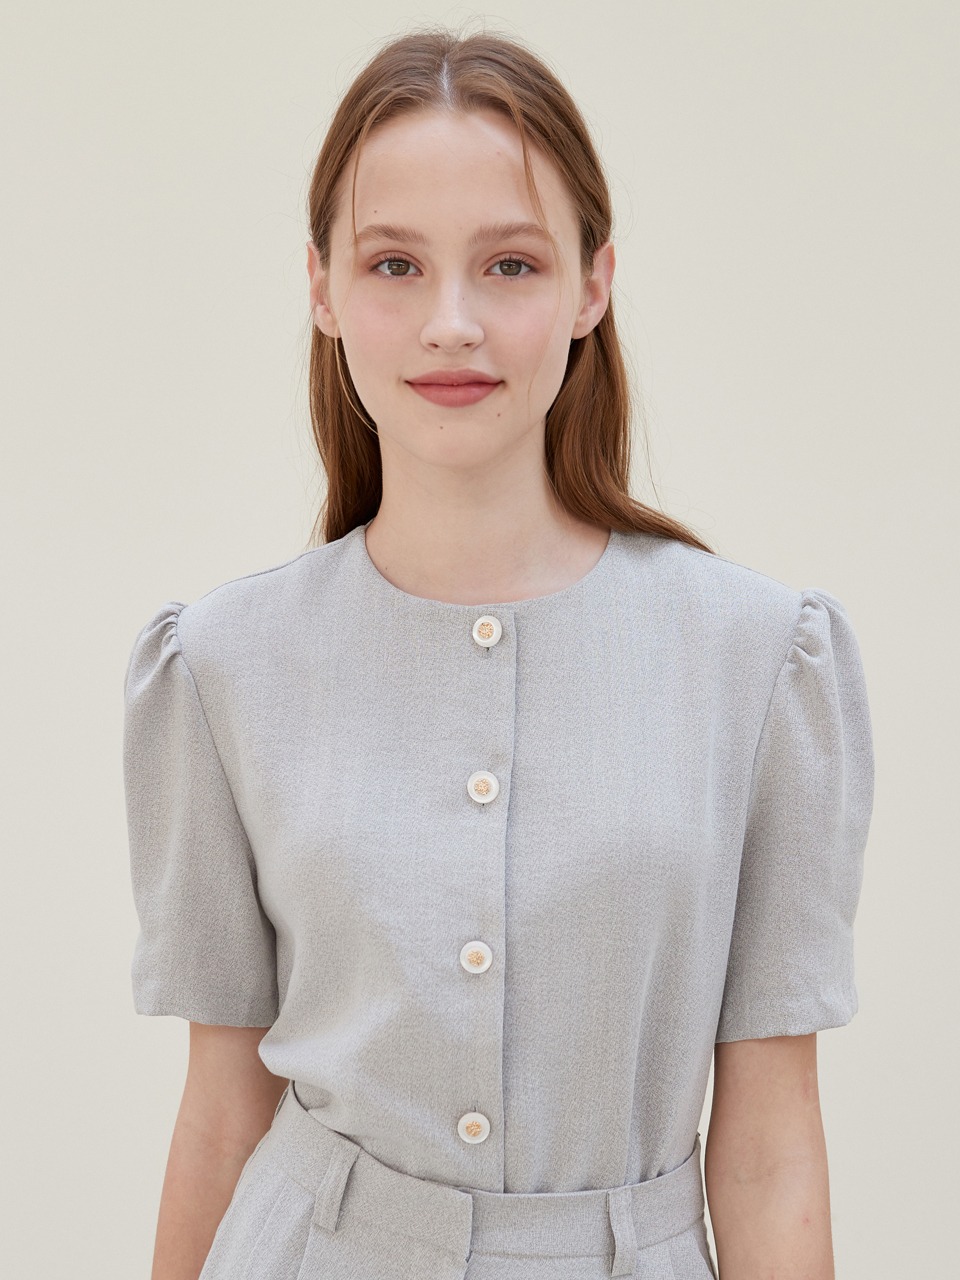 j1020 classic button blouse (gray)